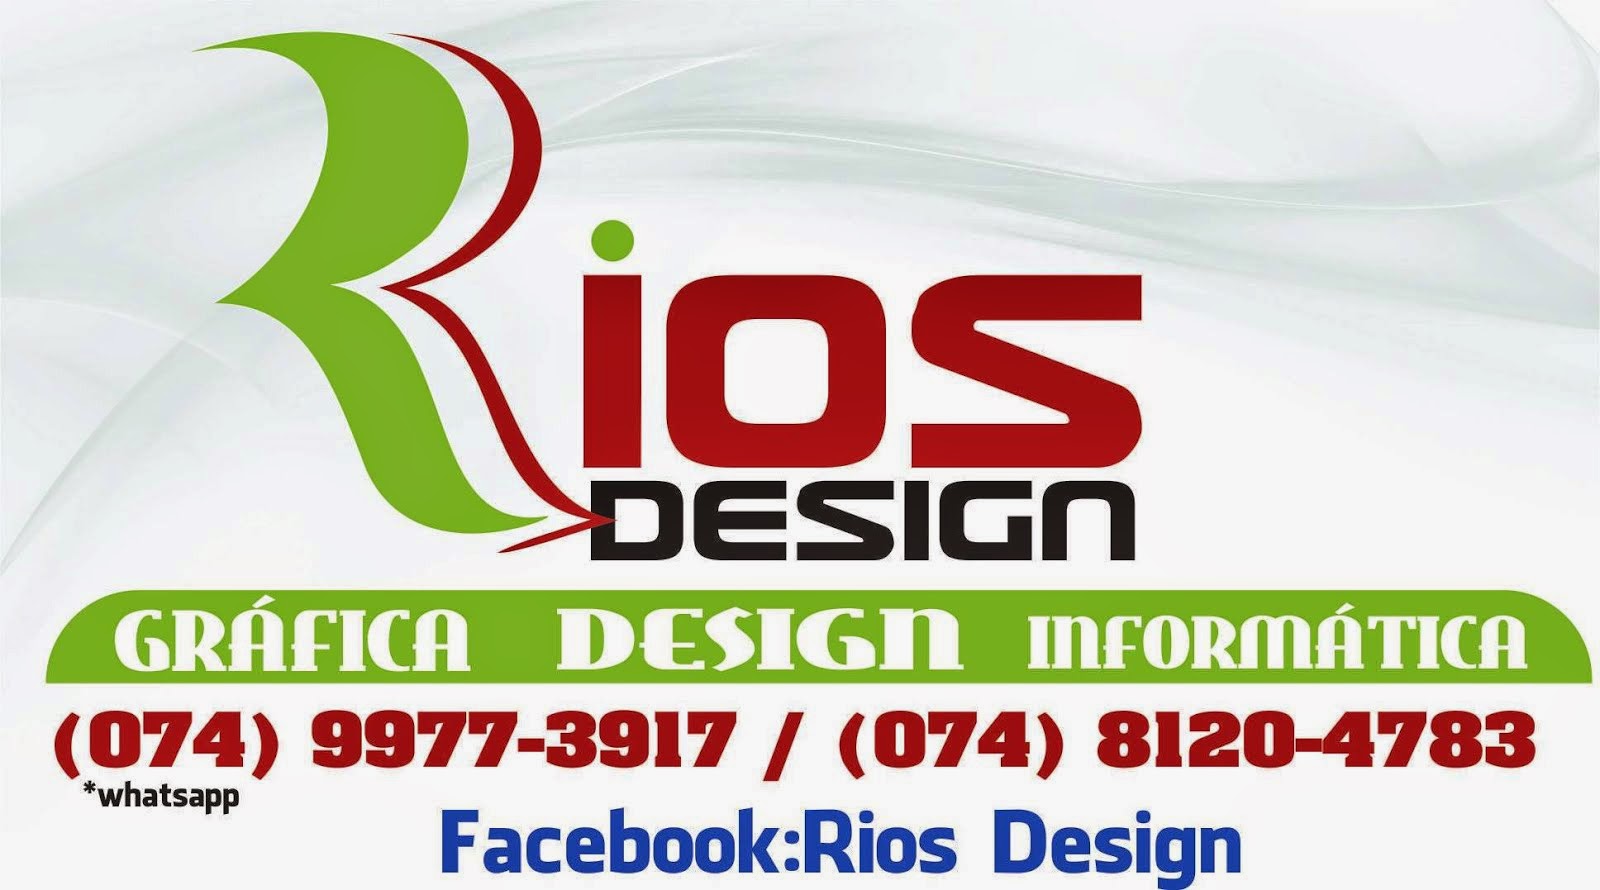 Rios Design